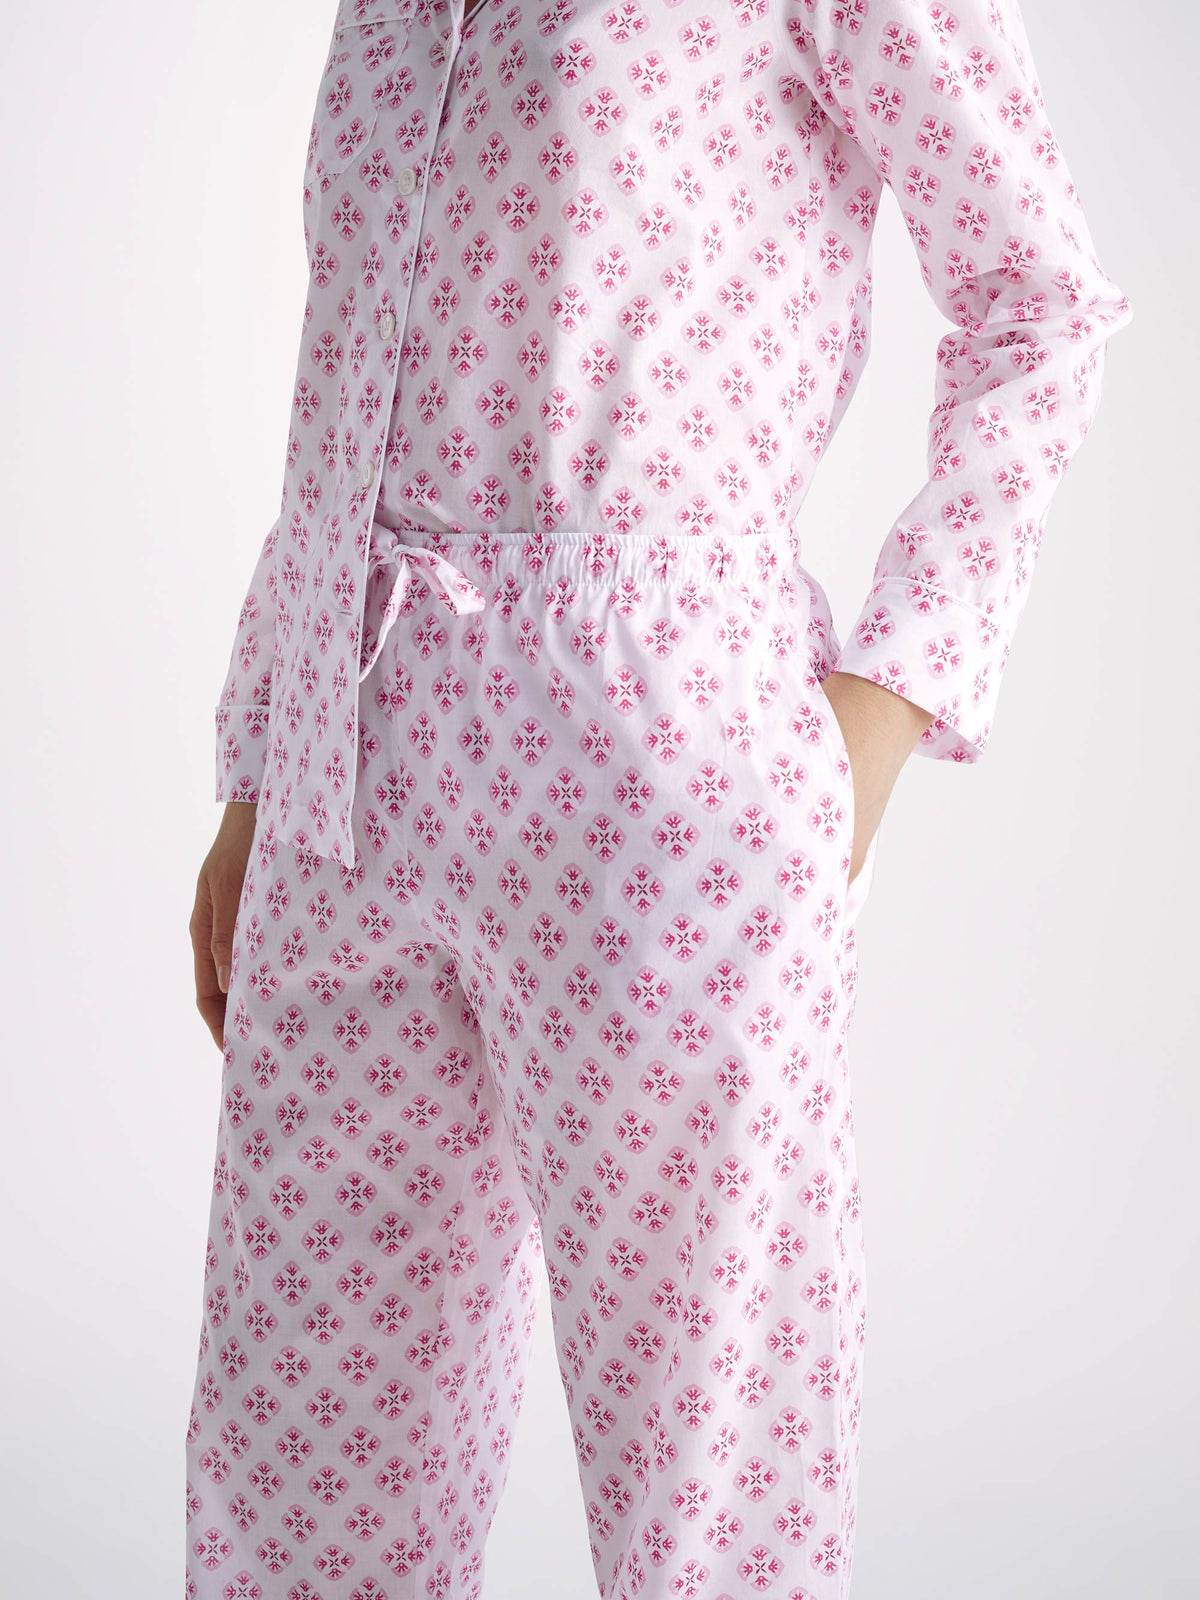 Women's Pyjamas Ledbury 62 Cotton Batiste White